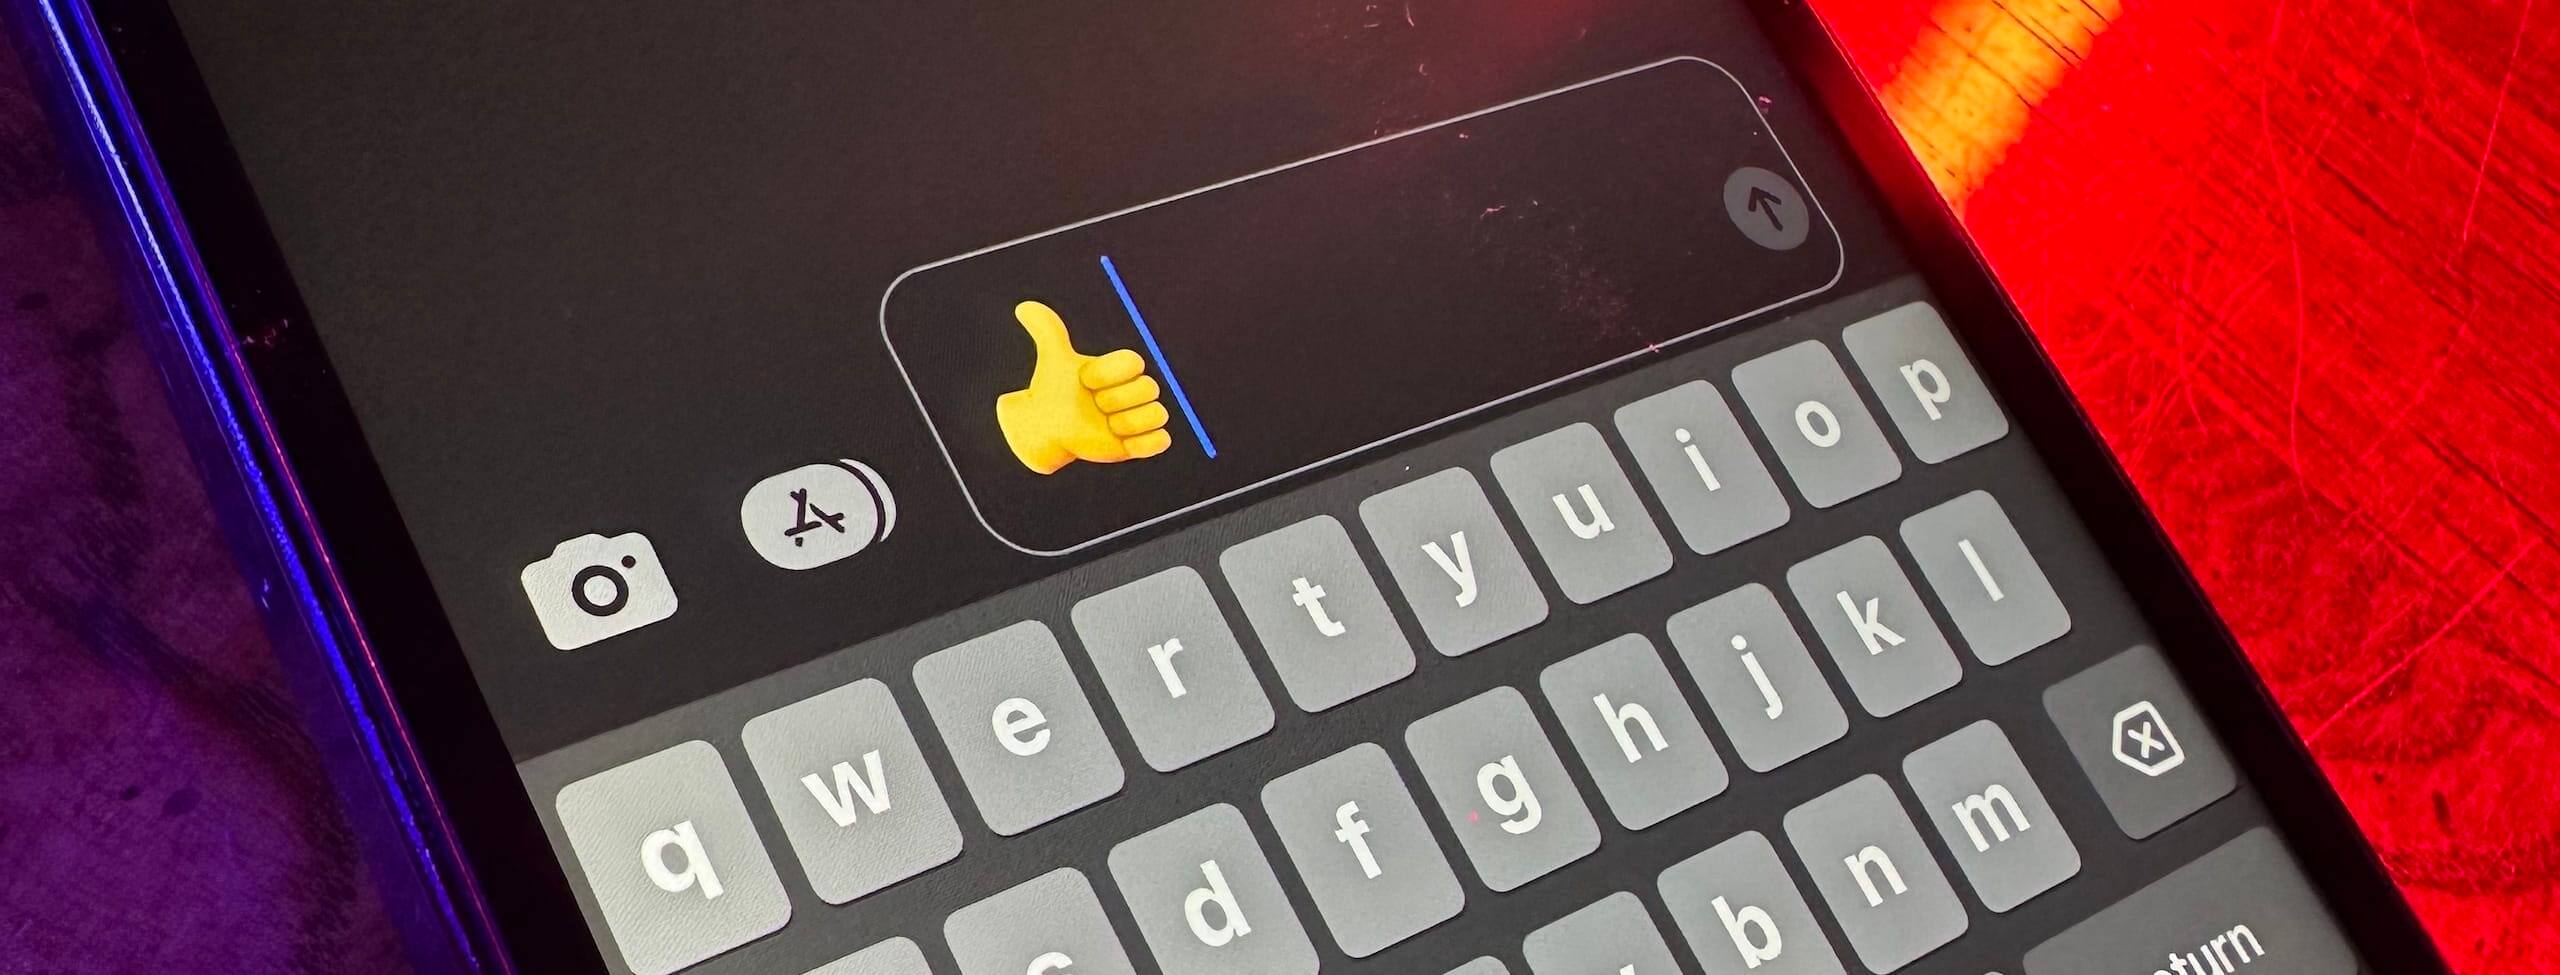 Phone with thumbs up emoji